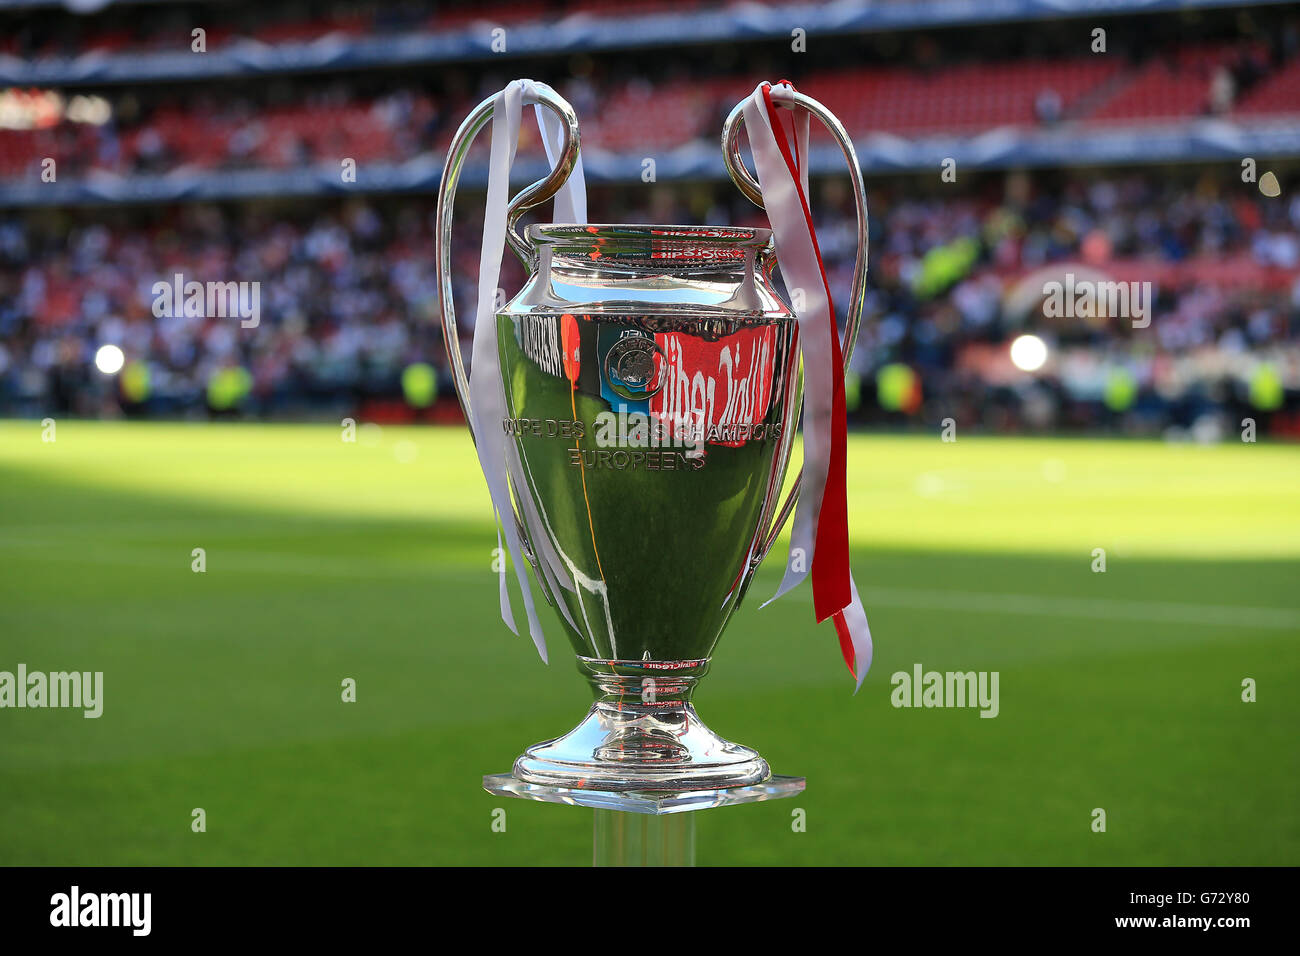 Football - Ligue des Champions - Final - v Real madrid - Atletico Madrid Estadio da Luz Banque D'Images